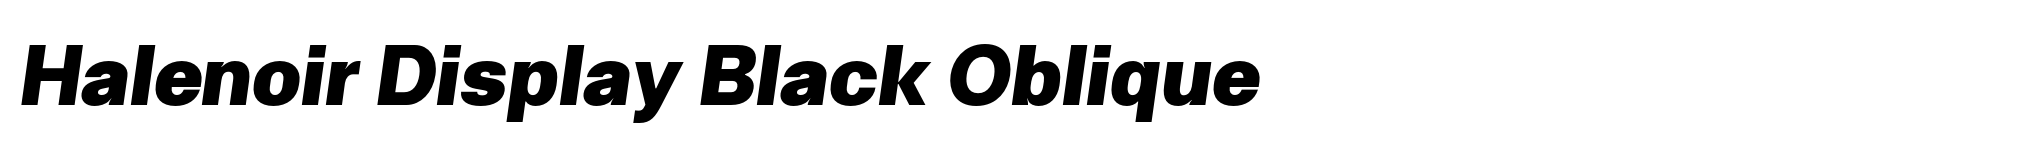 Halenoir Display Black Oblique image